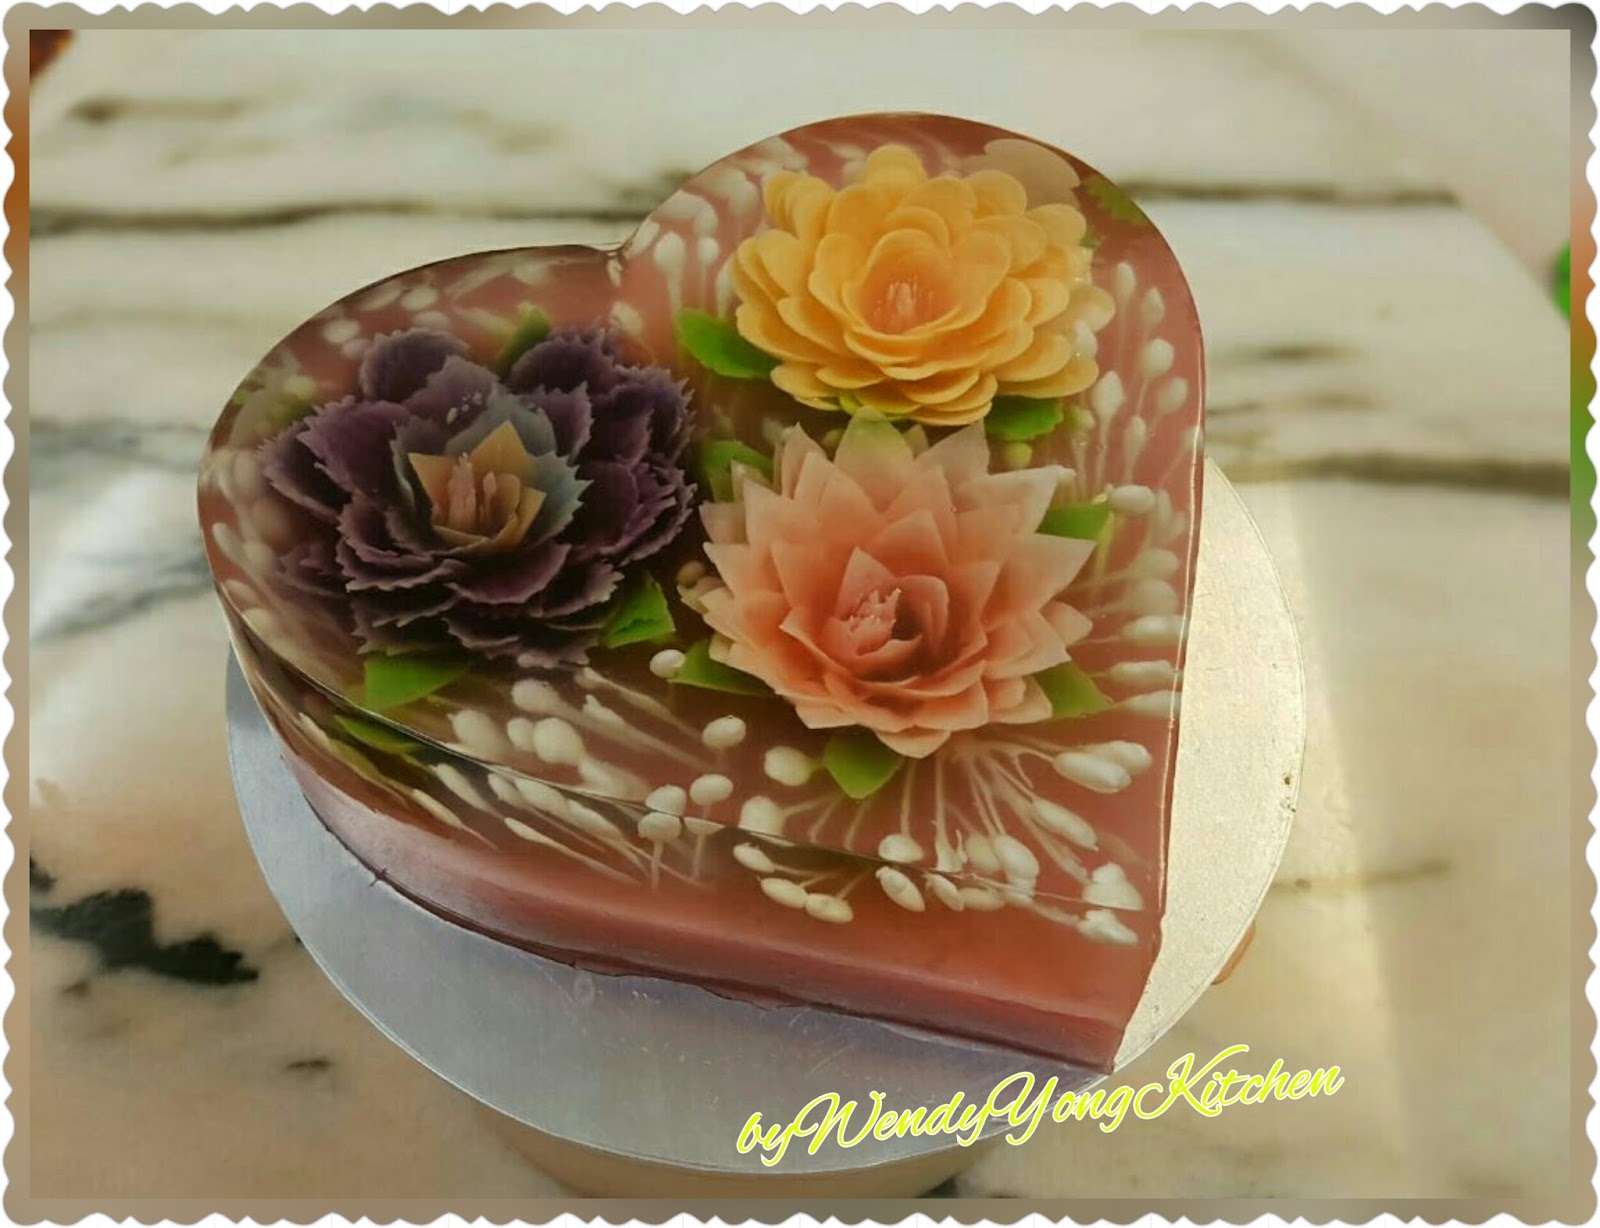 WendyYongKitchen~爱心烘焙记录: 3D jelly art cake天然色素3D 果冻花